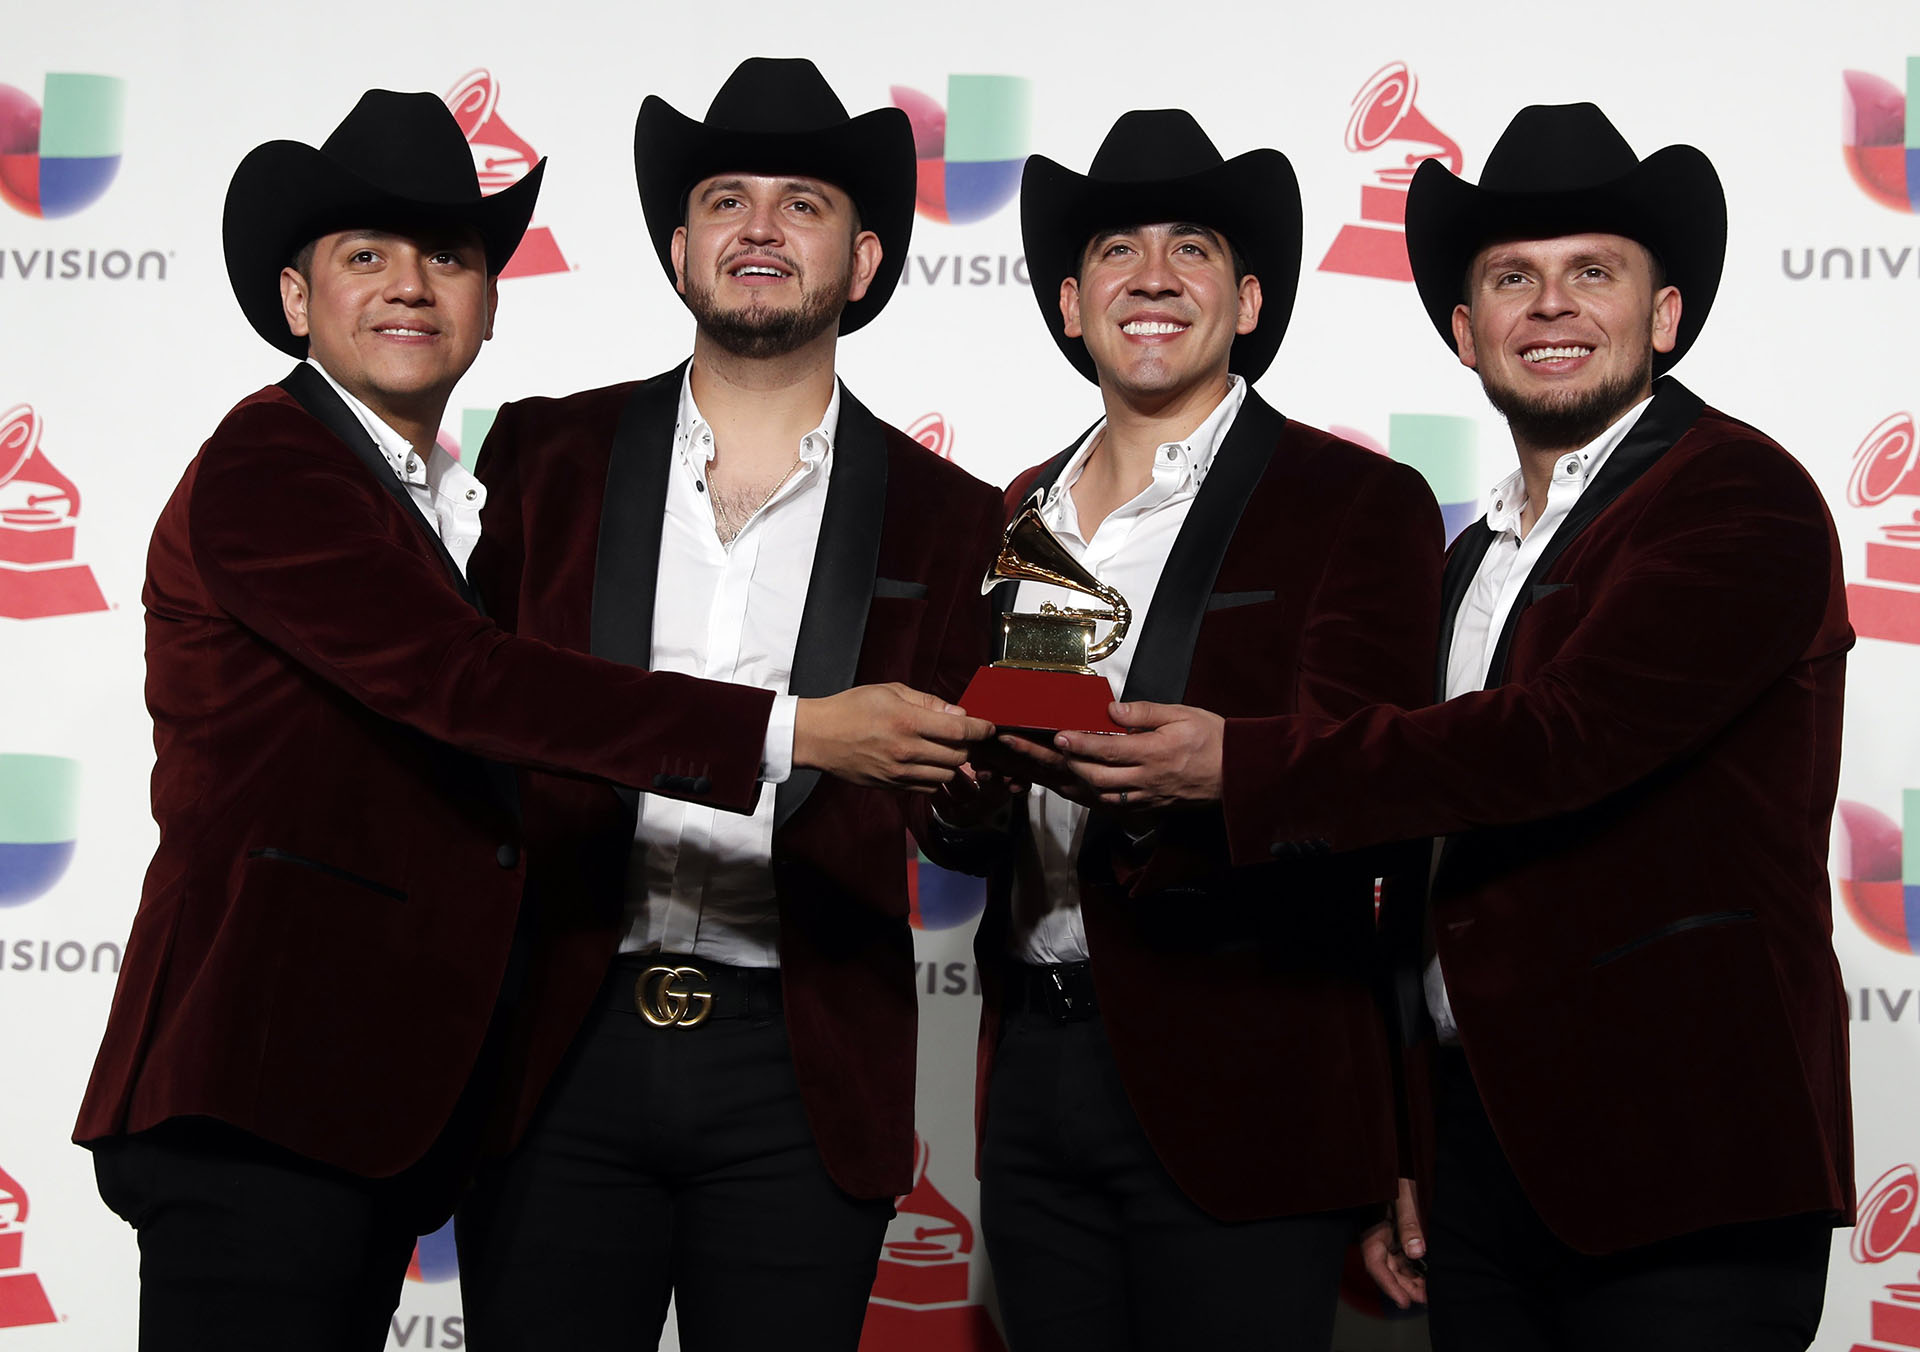 Calibre 50 ganó un Latin Grammy por "Guerra de poder" dentro de la categoría "Mejor álbum norteño". REUTERS/Steve Marcus